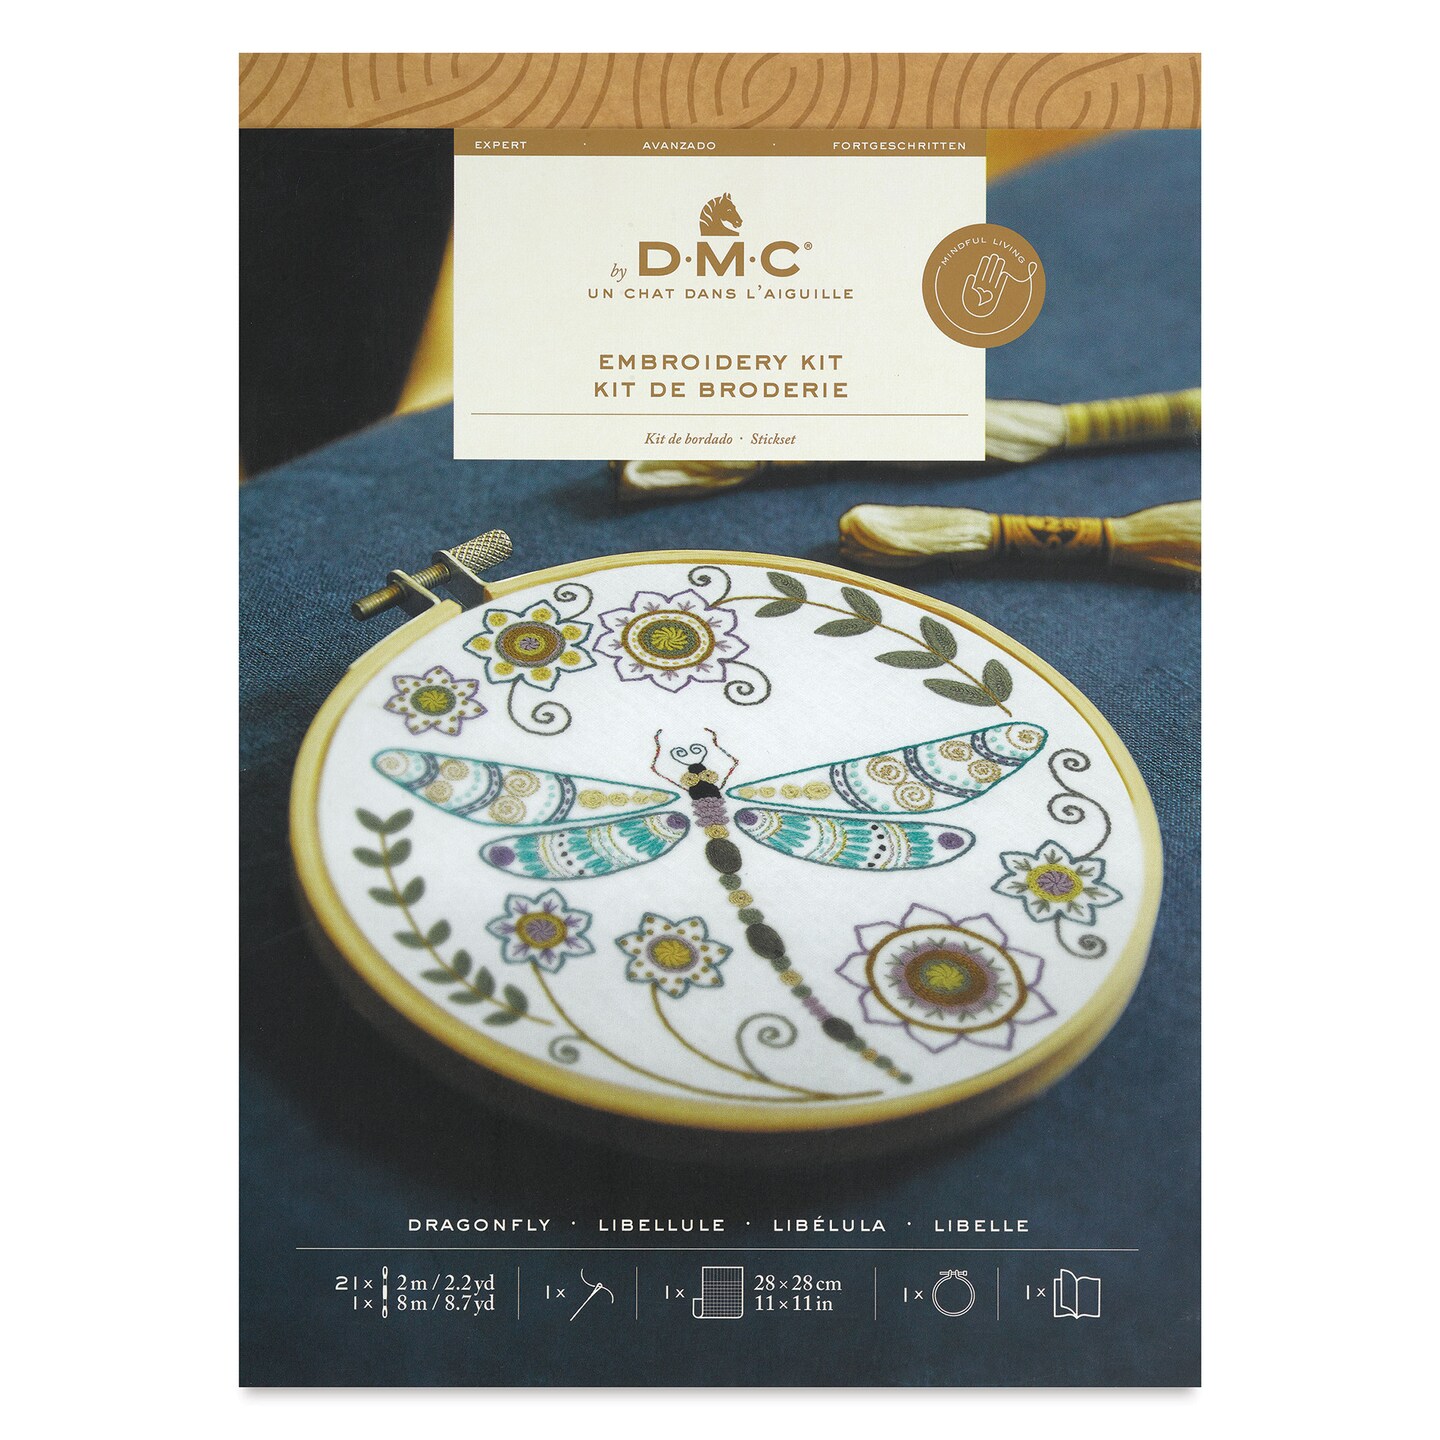 DMC The Designer Collection Embroidery Kits - &#x201C;Dragonfly&#x201D; by Un Chat dans l&#x27;Aiguille, Advanced